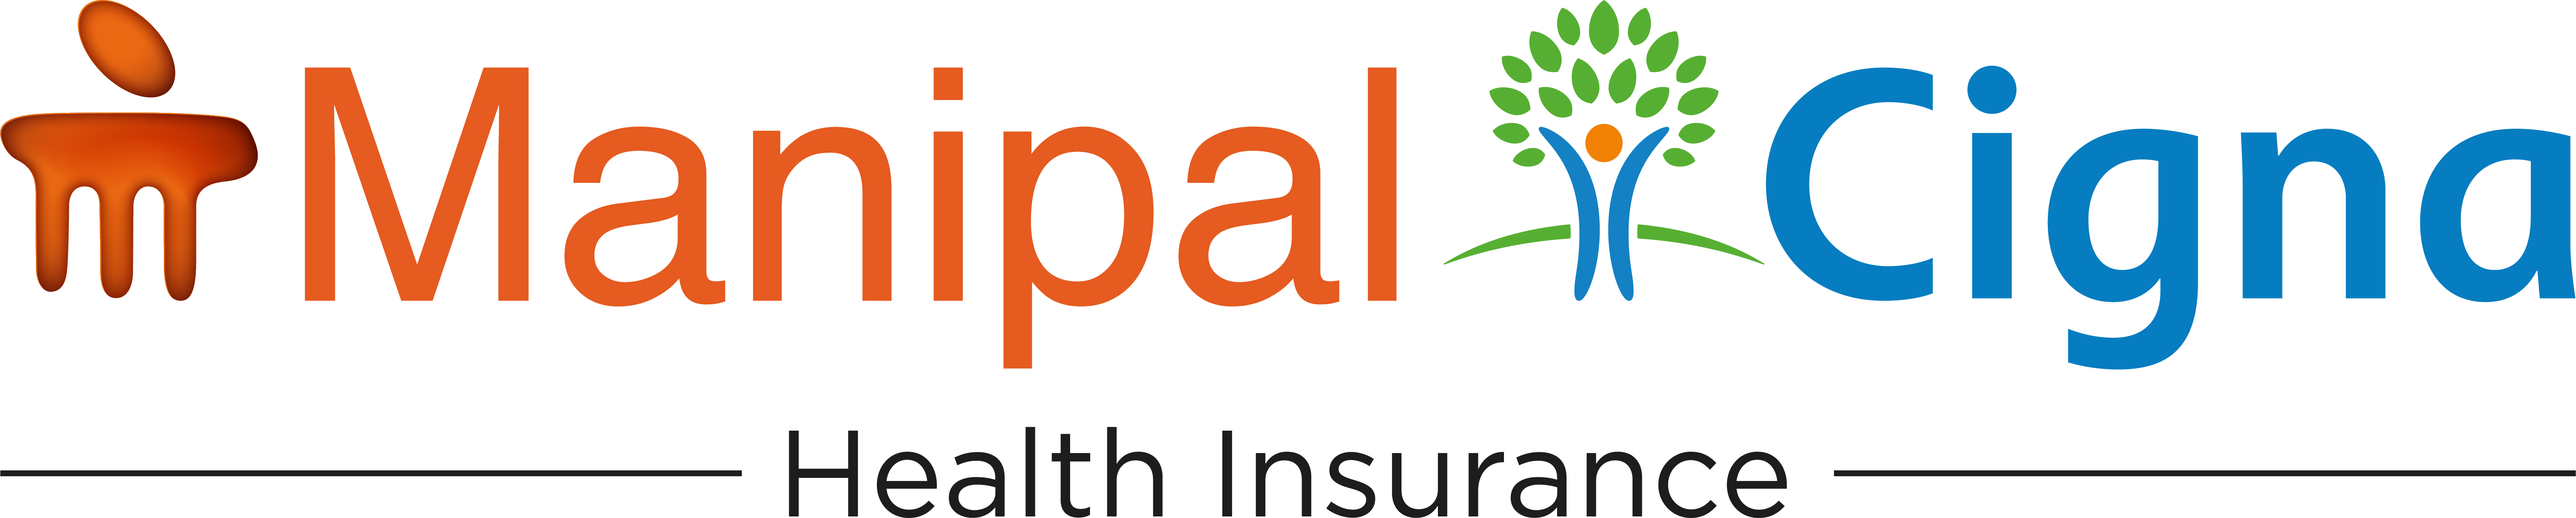 Super Top Up Health Insurance Plan - Get Quote Online